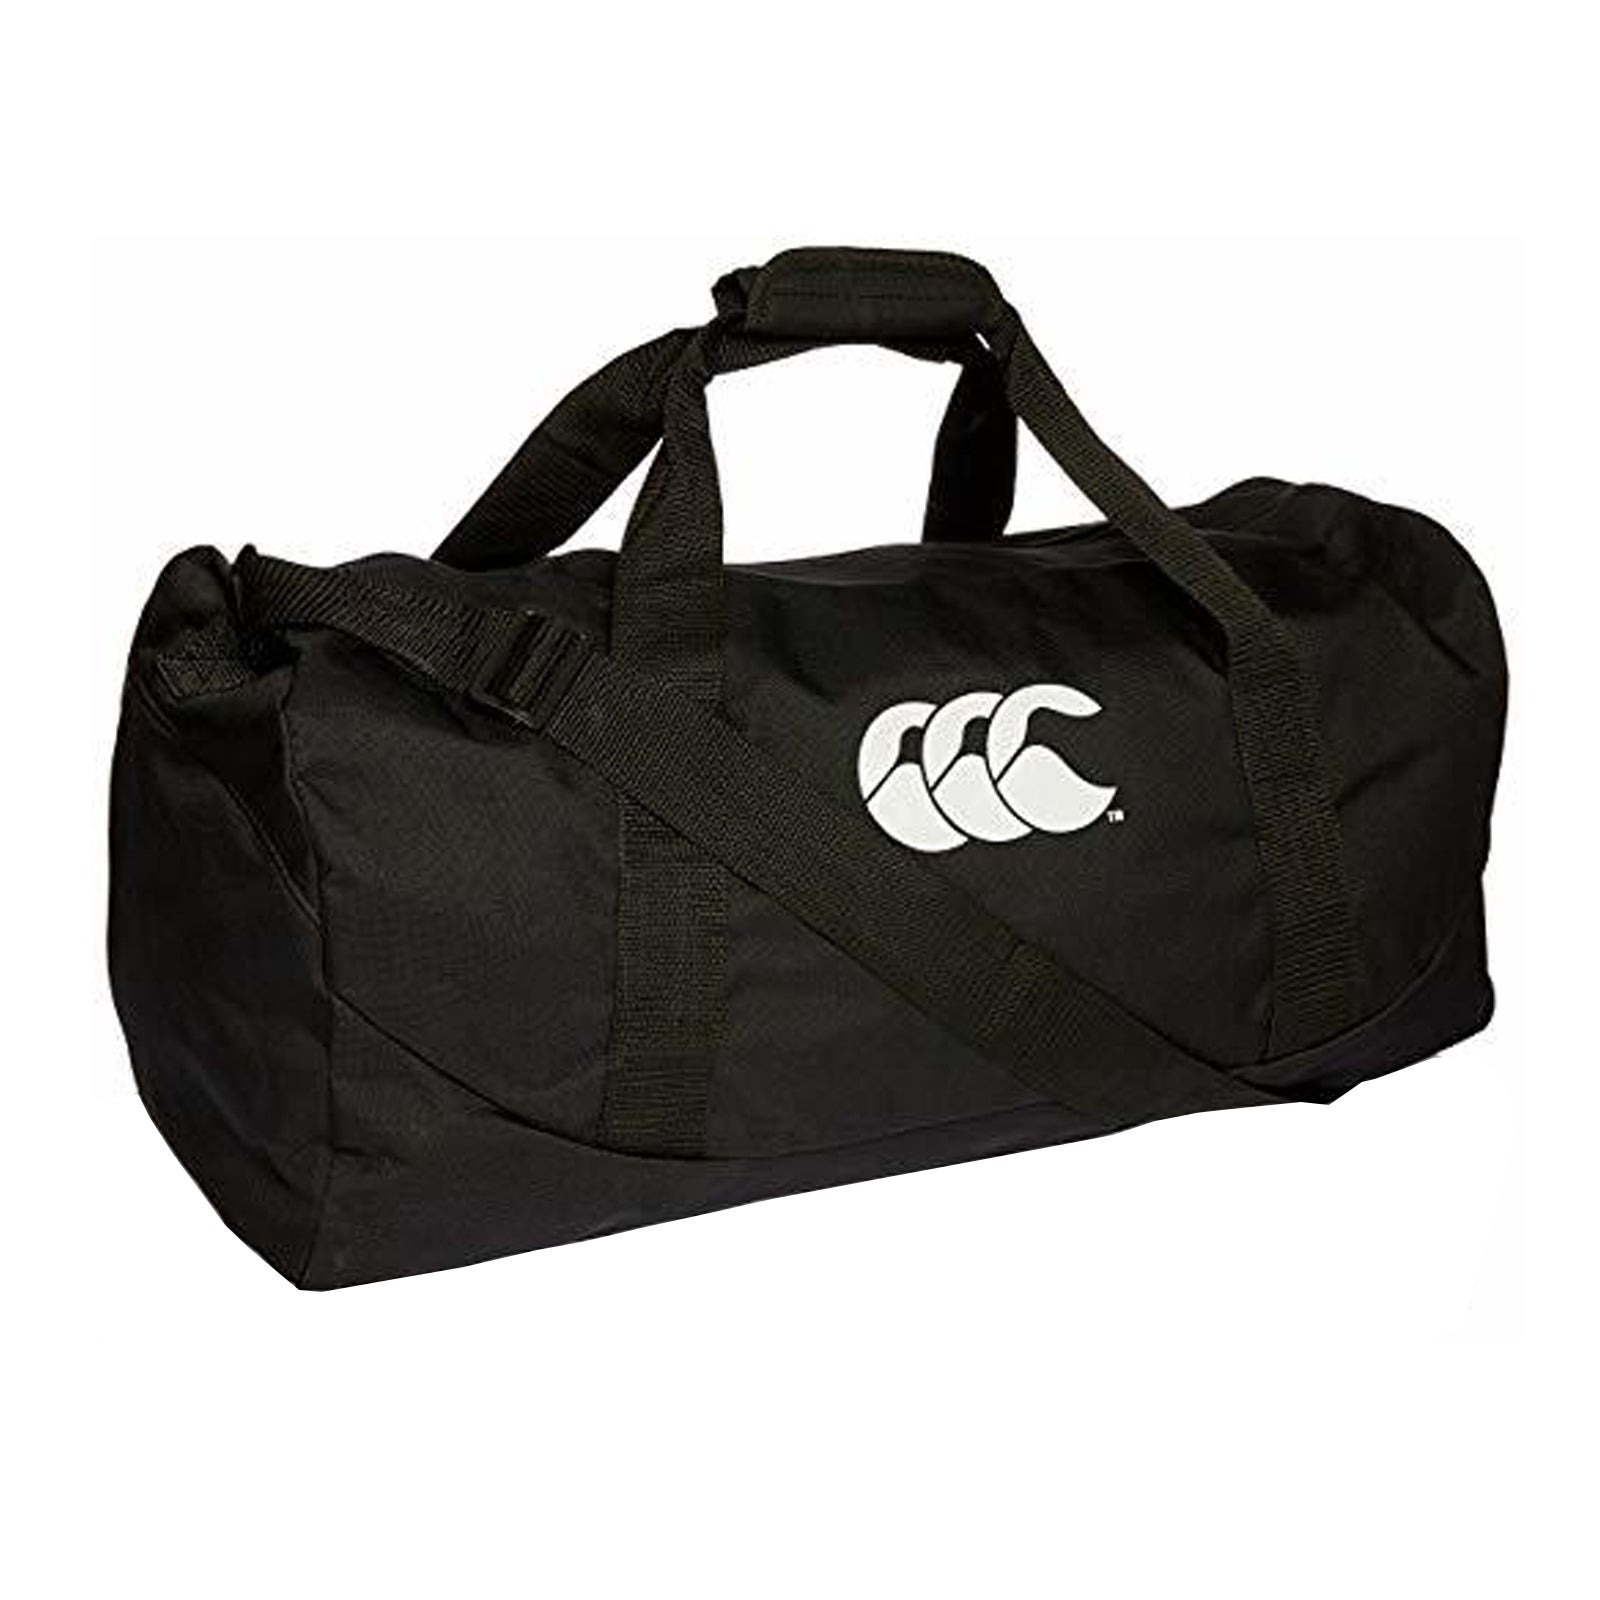 Canterbury 51L Packaway Bag Gym Sports Duffle Duffel Travel - Black